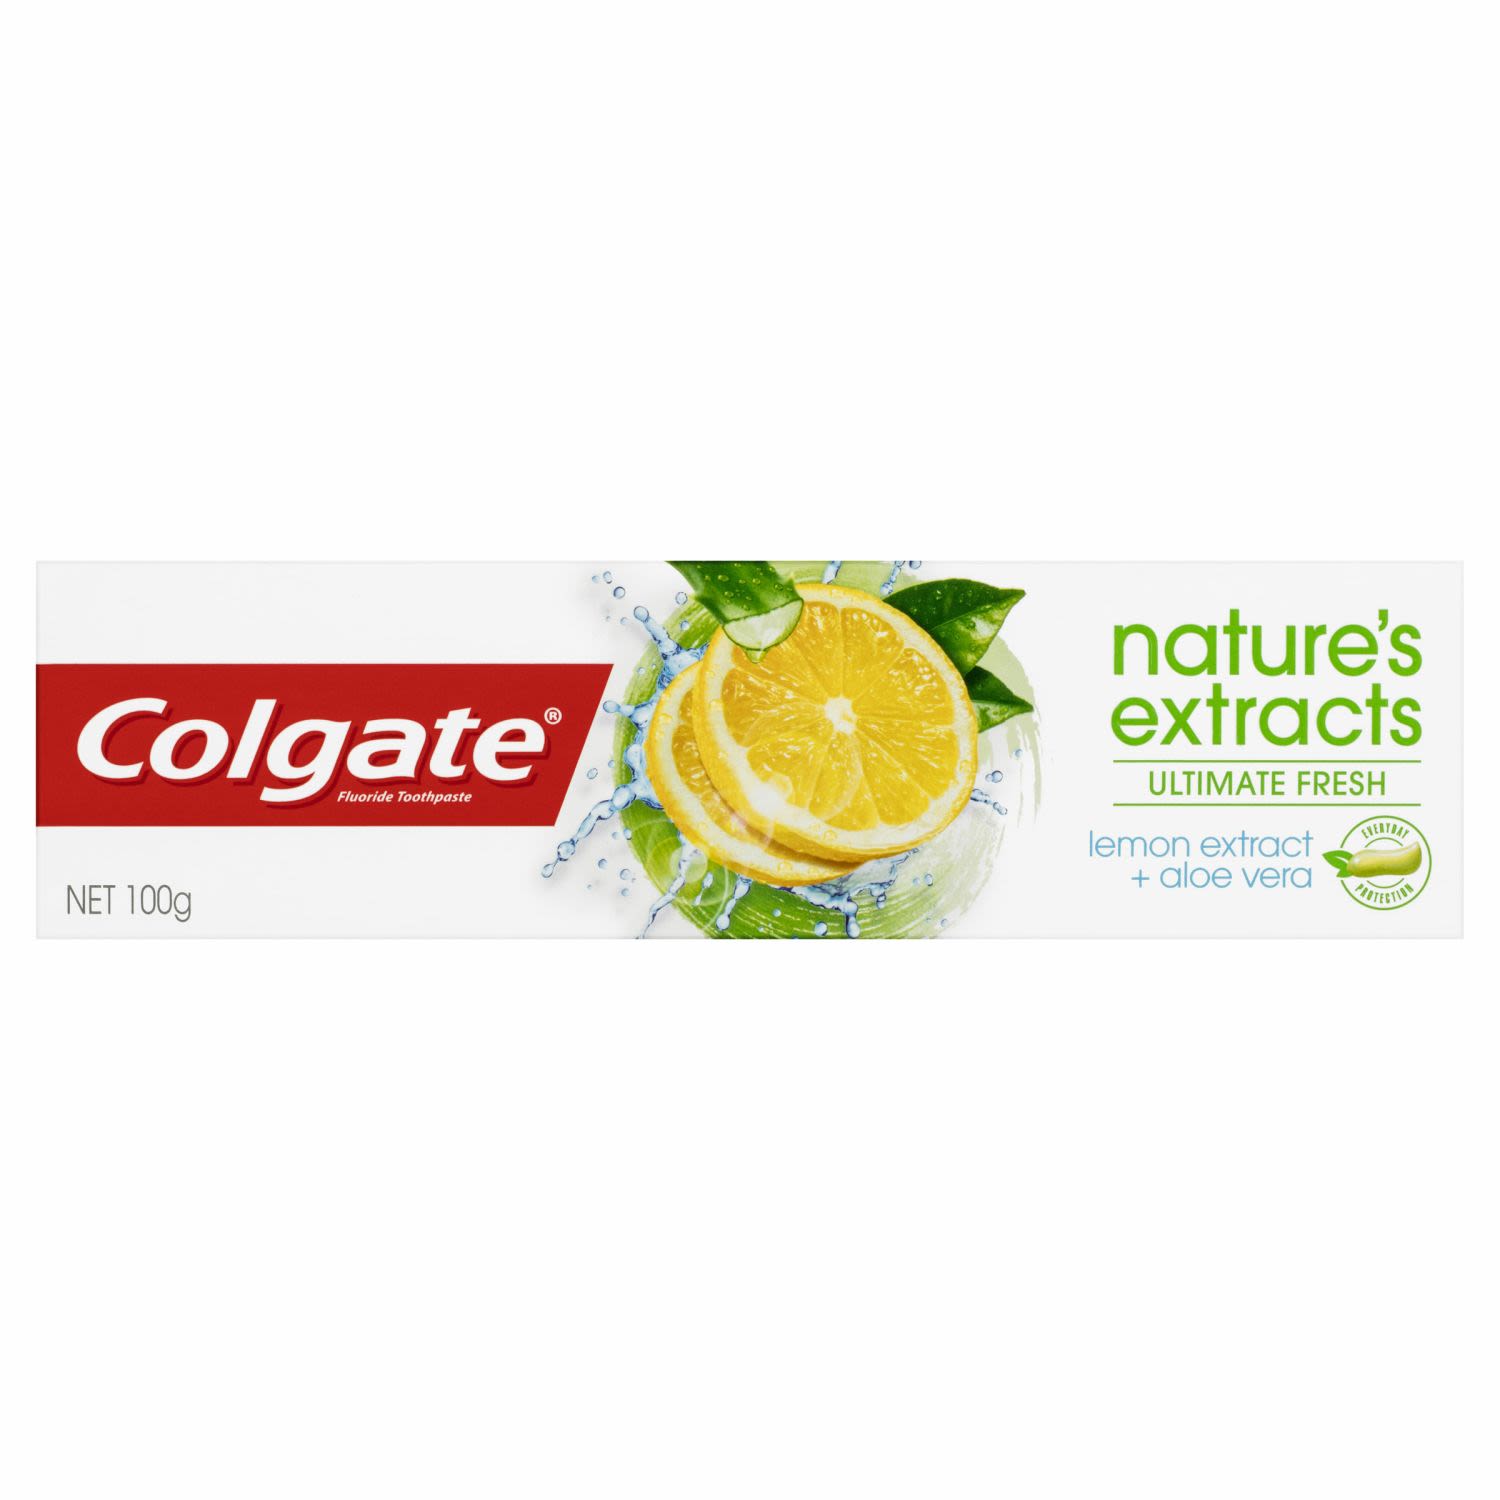 Colgate Nature's Extracts Ultimate Fresh Lemon Extract Plus Aloe Vera Toothpaste, 100 Gram